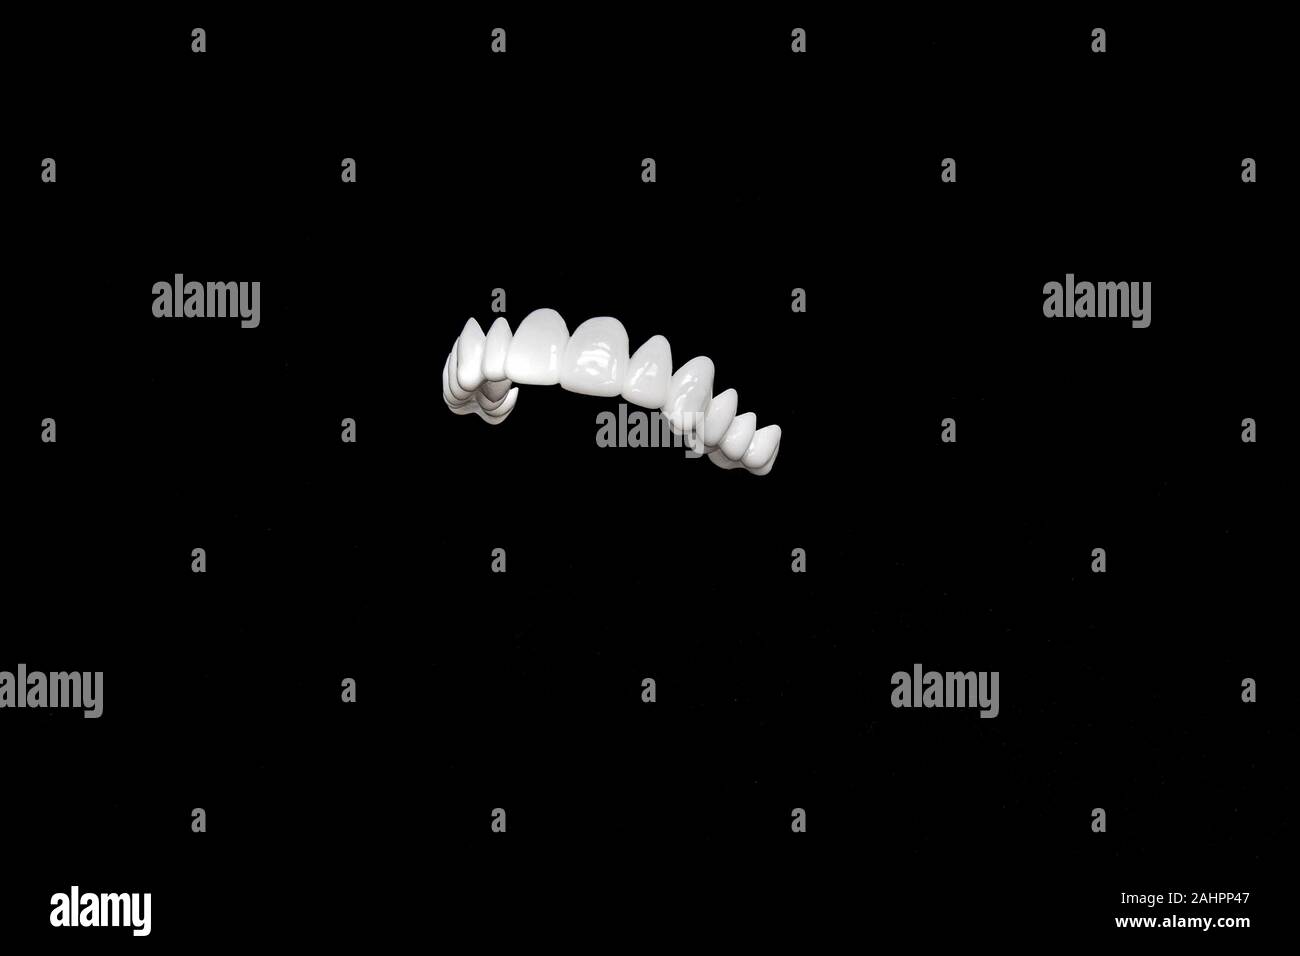 Un visuel 3d de la région de dents humaines Banque D'Images